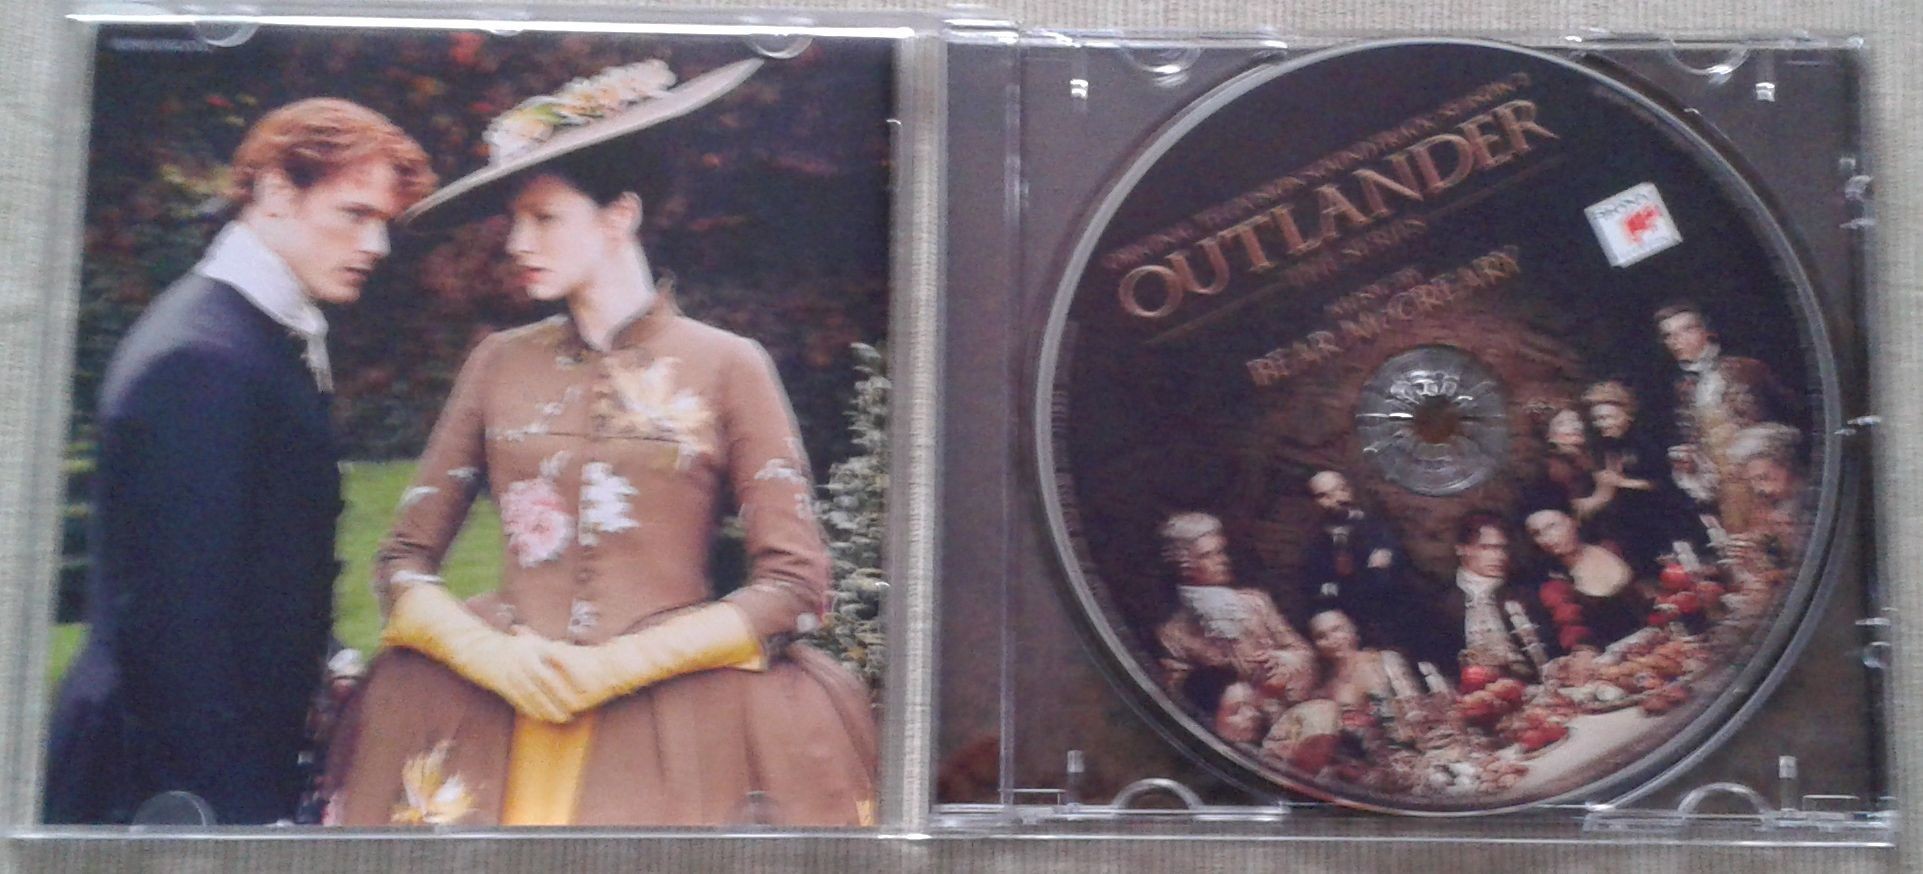 3. Outlander 2 środek z płytą 1CD Sony.jpg